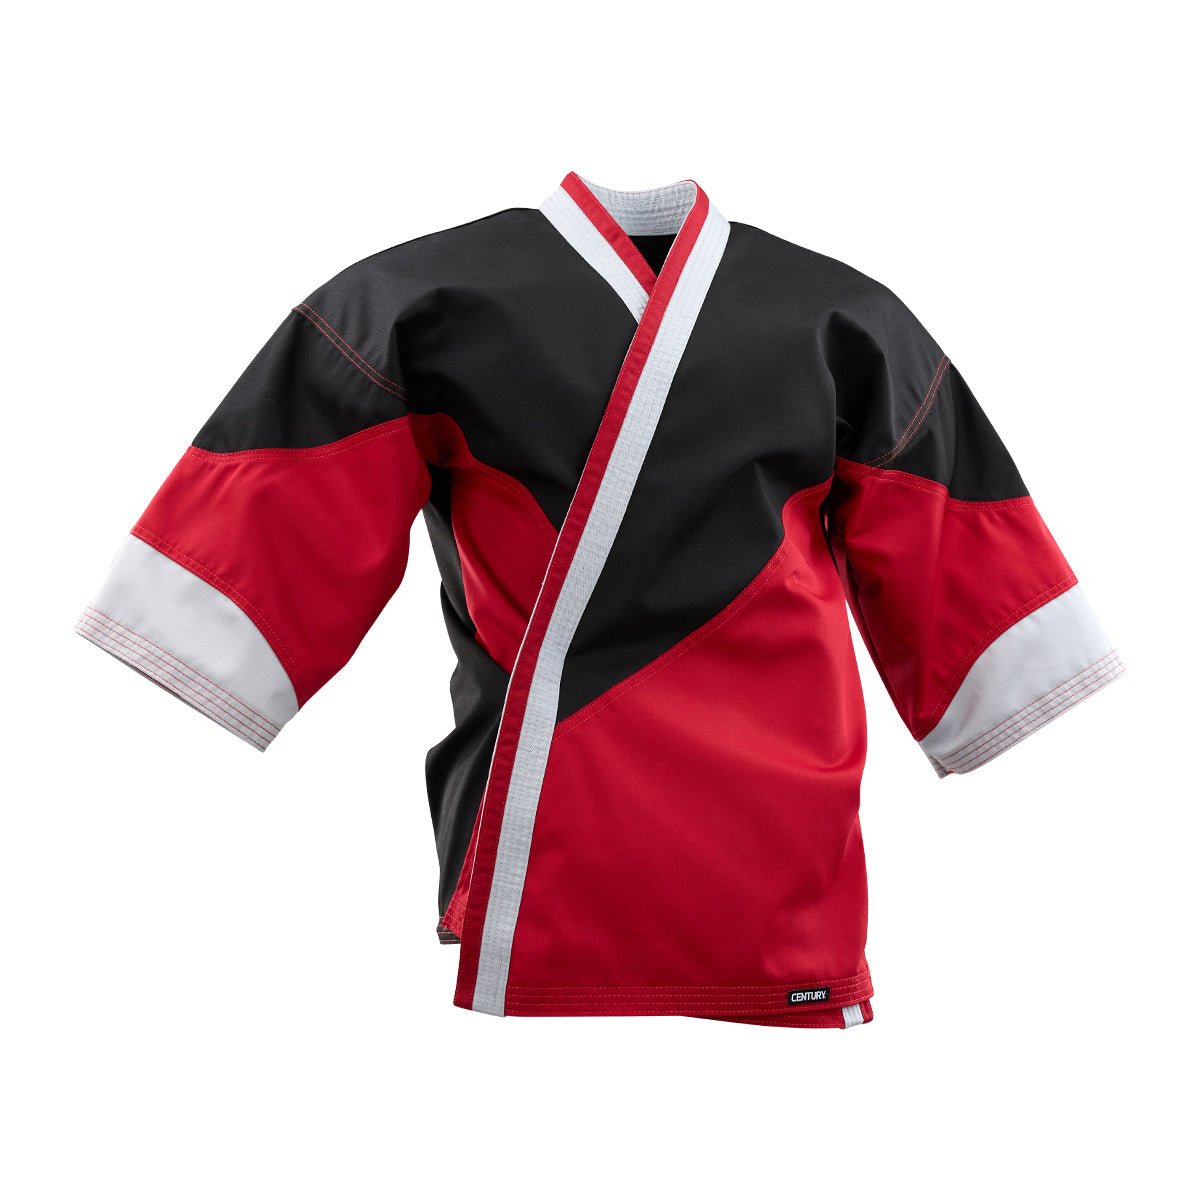 Tri-Color Program Uniform Jacket Black Grey Red